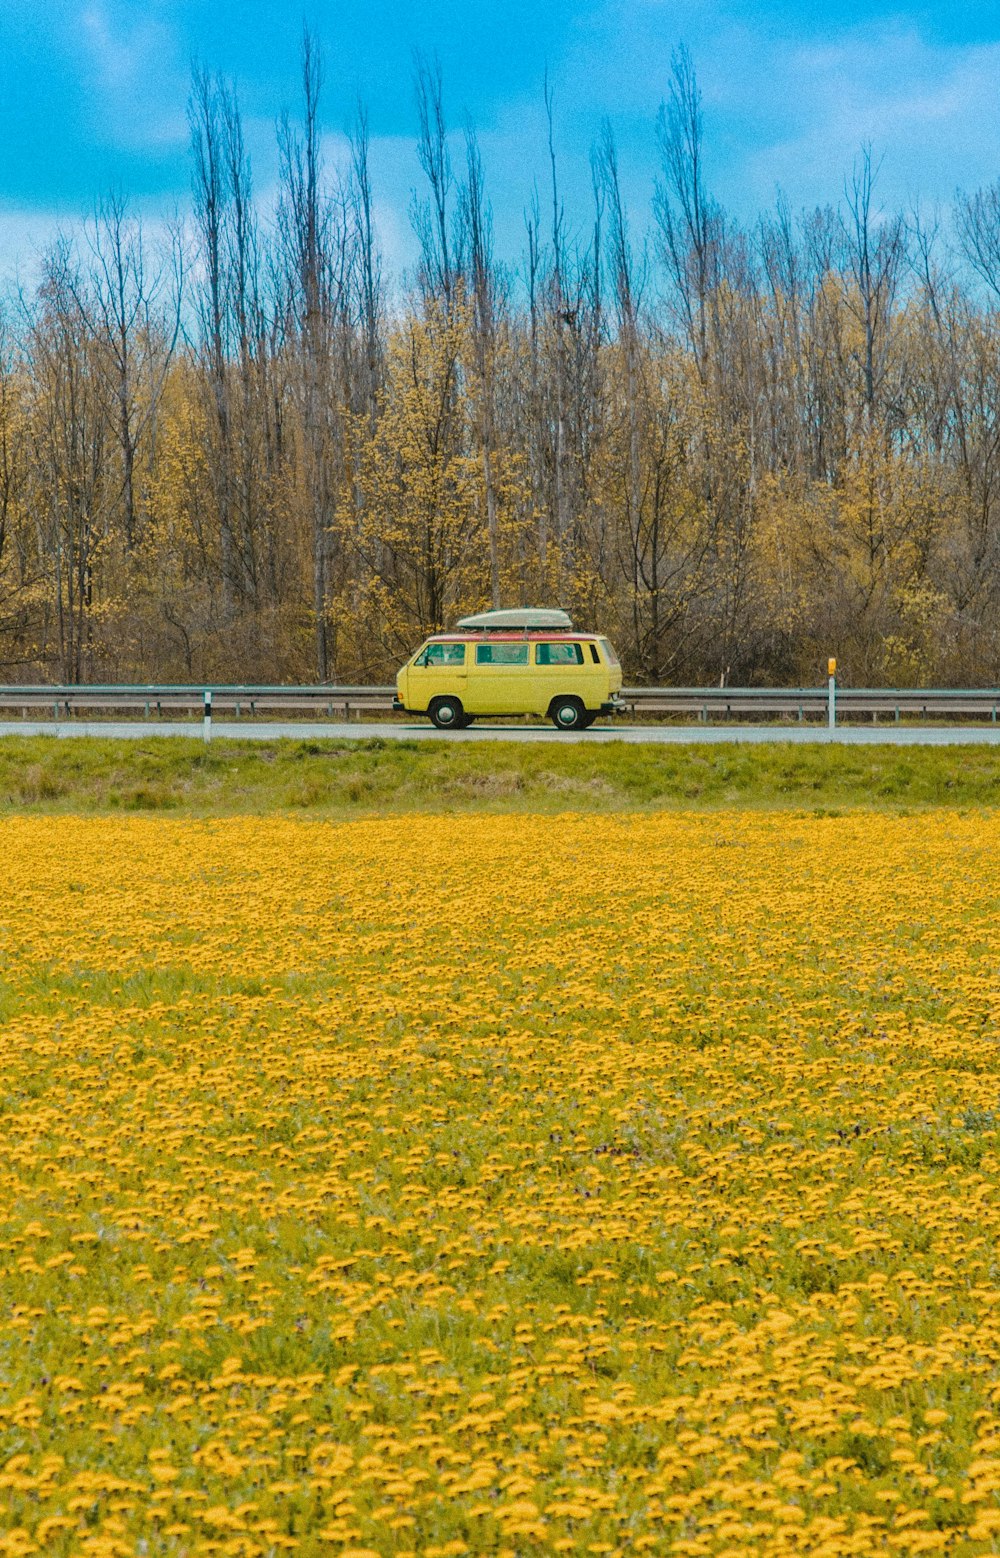 yellow van on yellow grass field